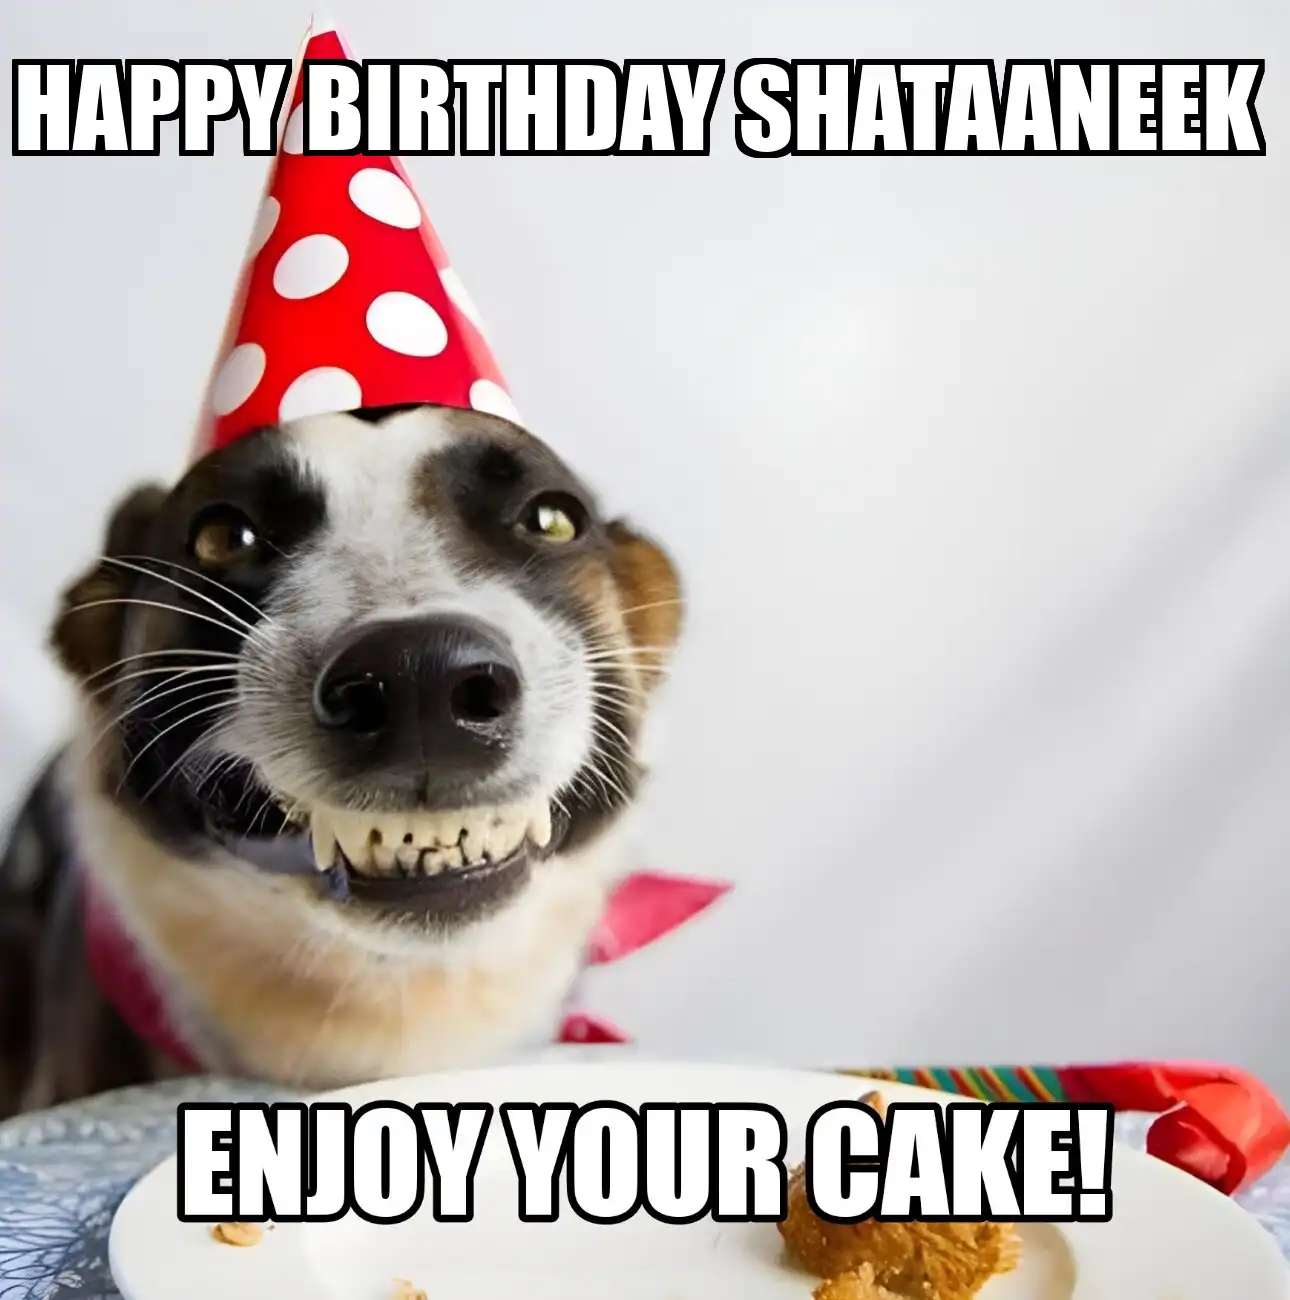 Happy Birthday Shataaneek Enjoy Your Cake Dog Meme